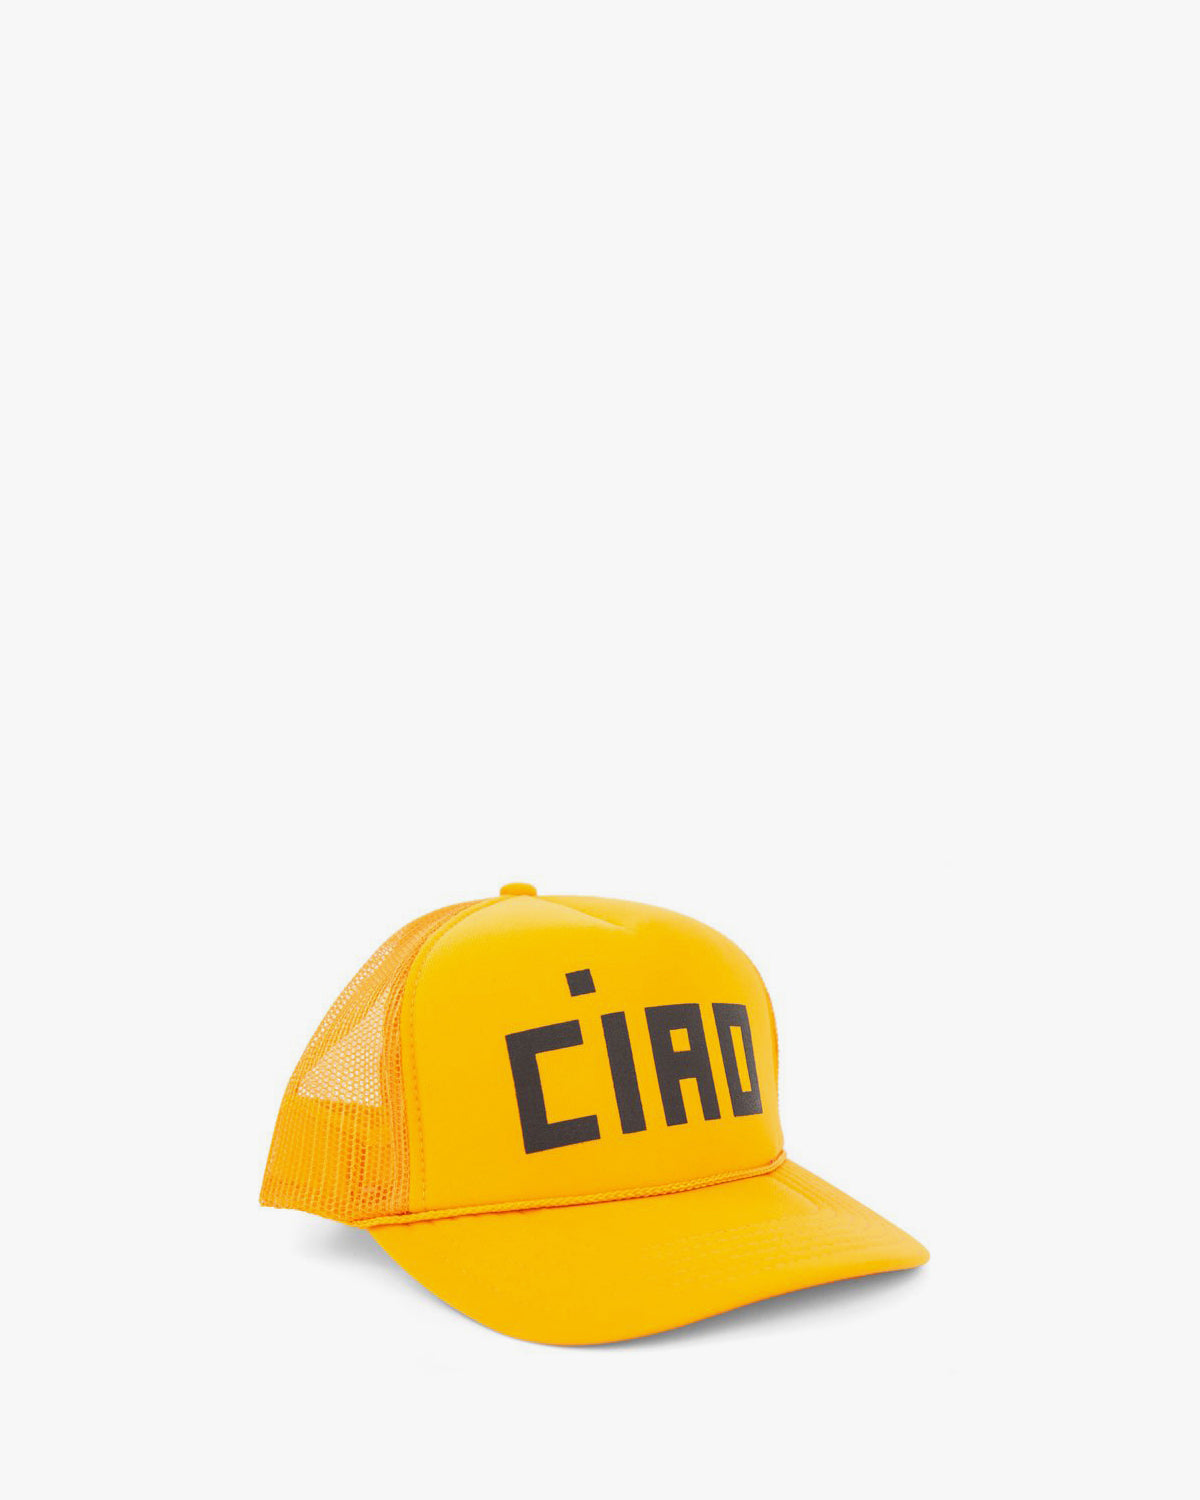 Ciao Trucker Hat in Marigold